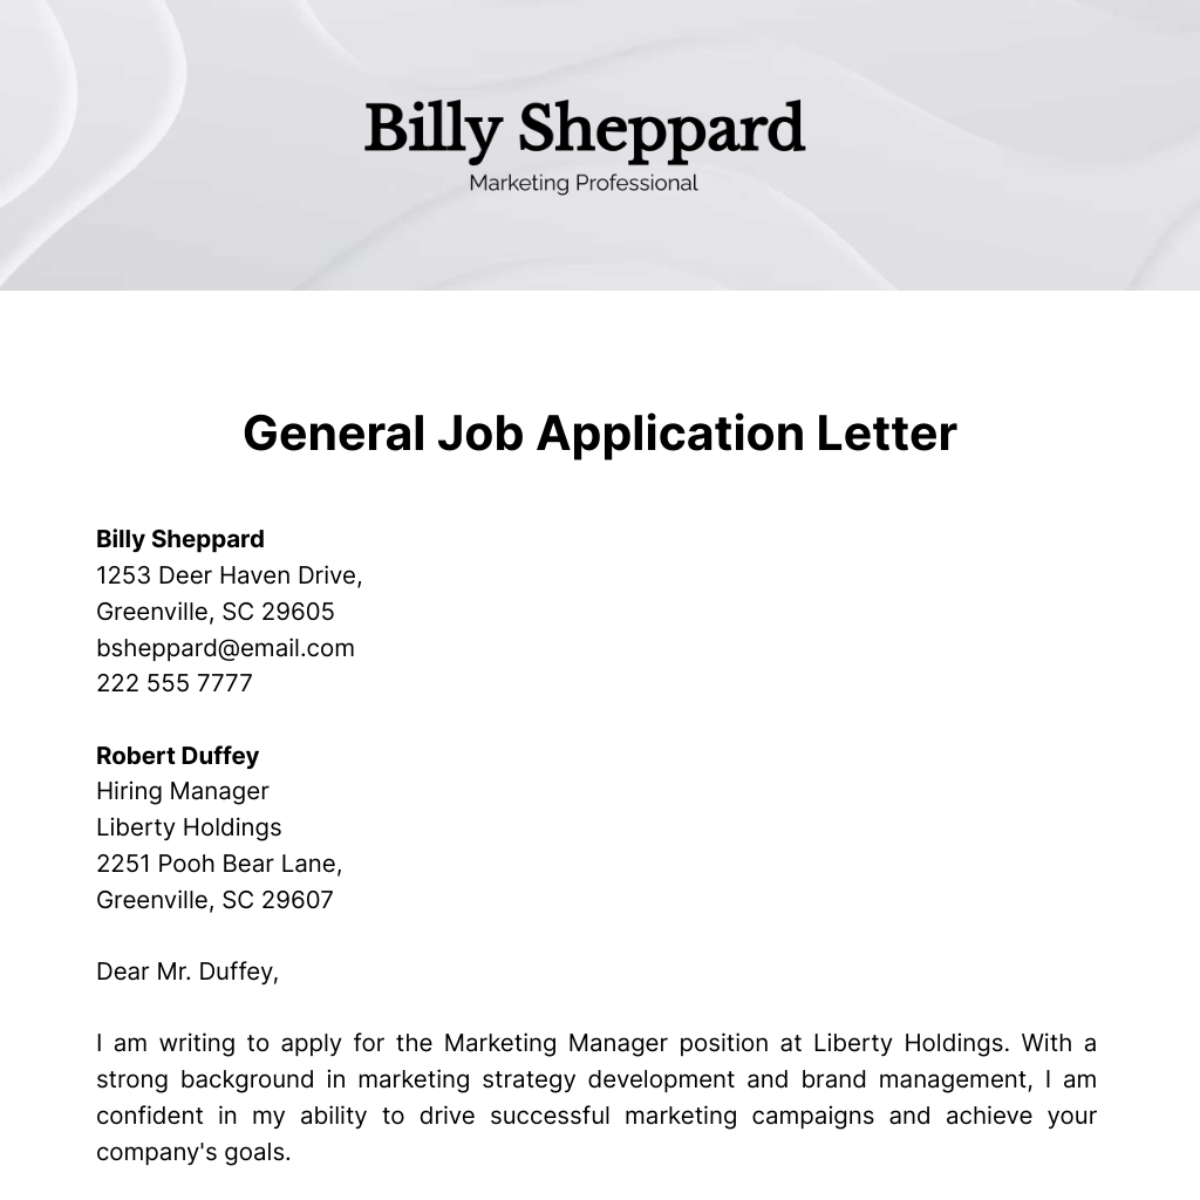 General Job Application Letter  Template